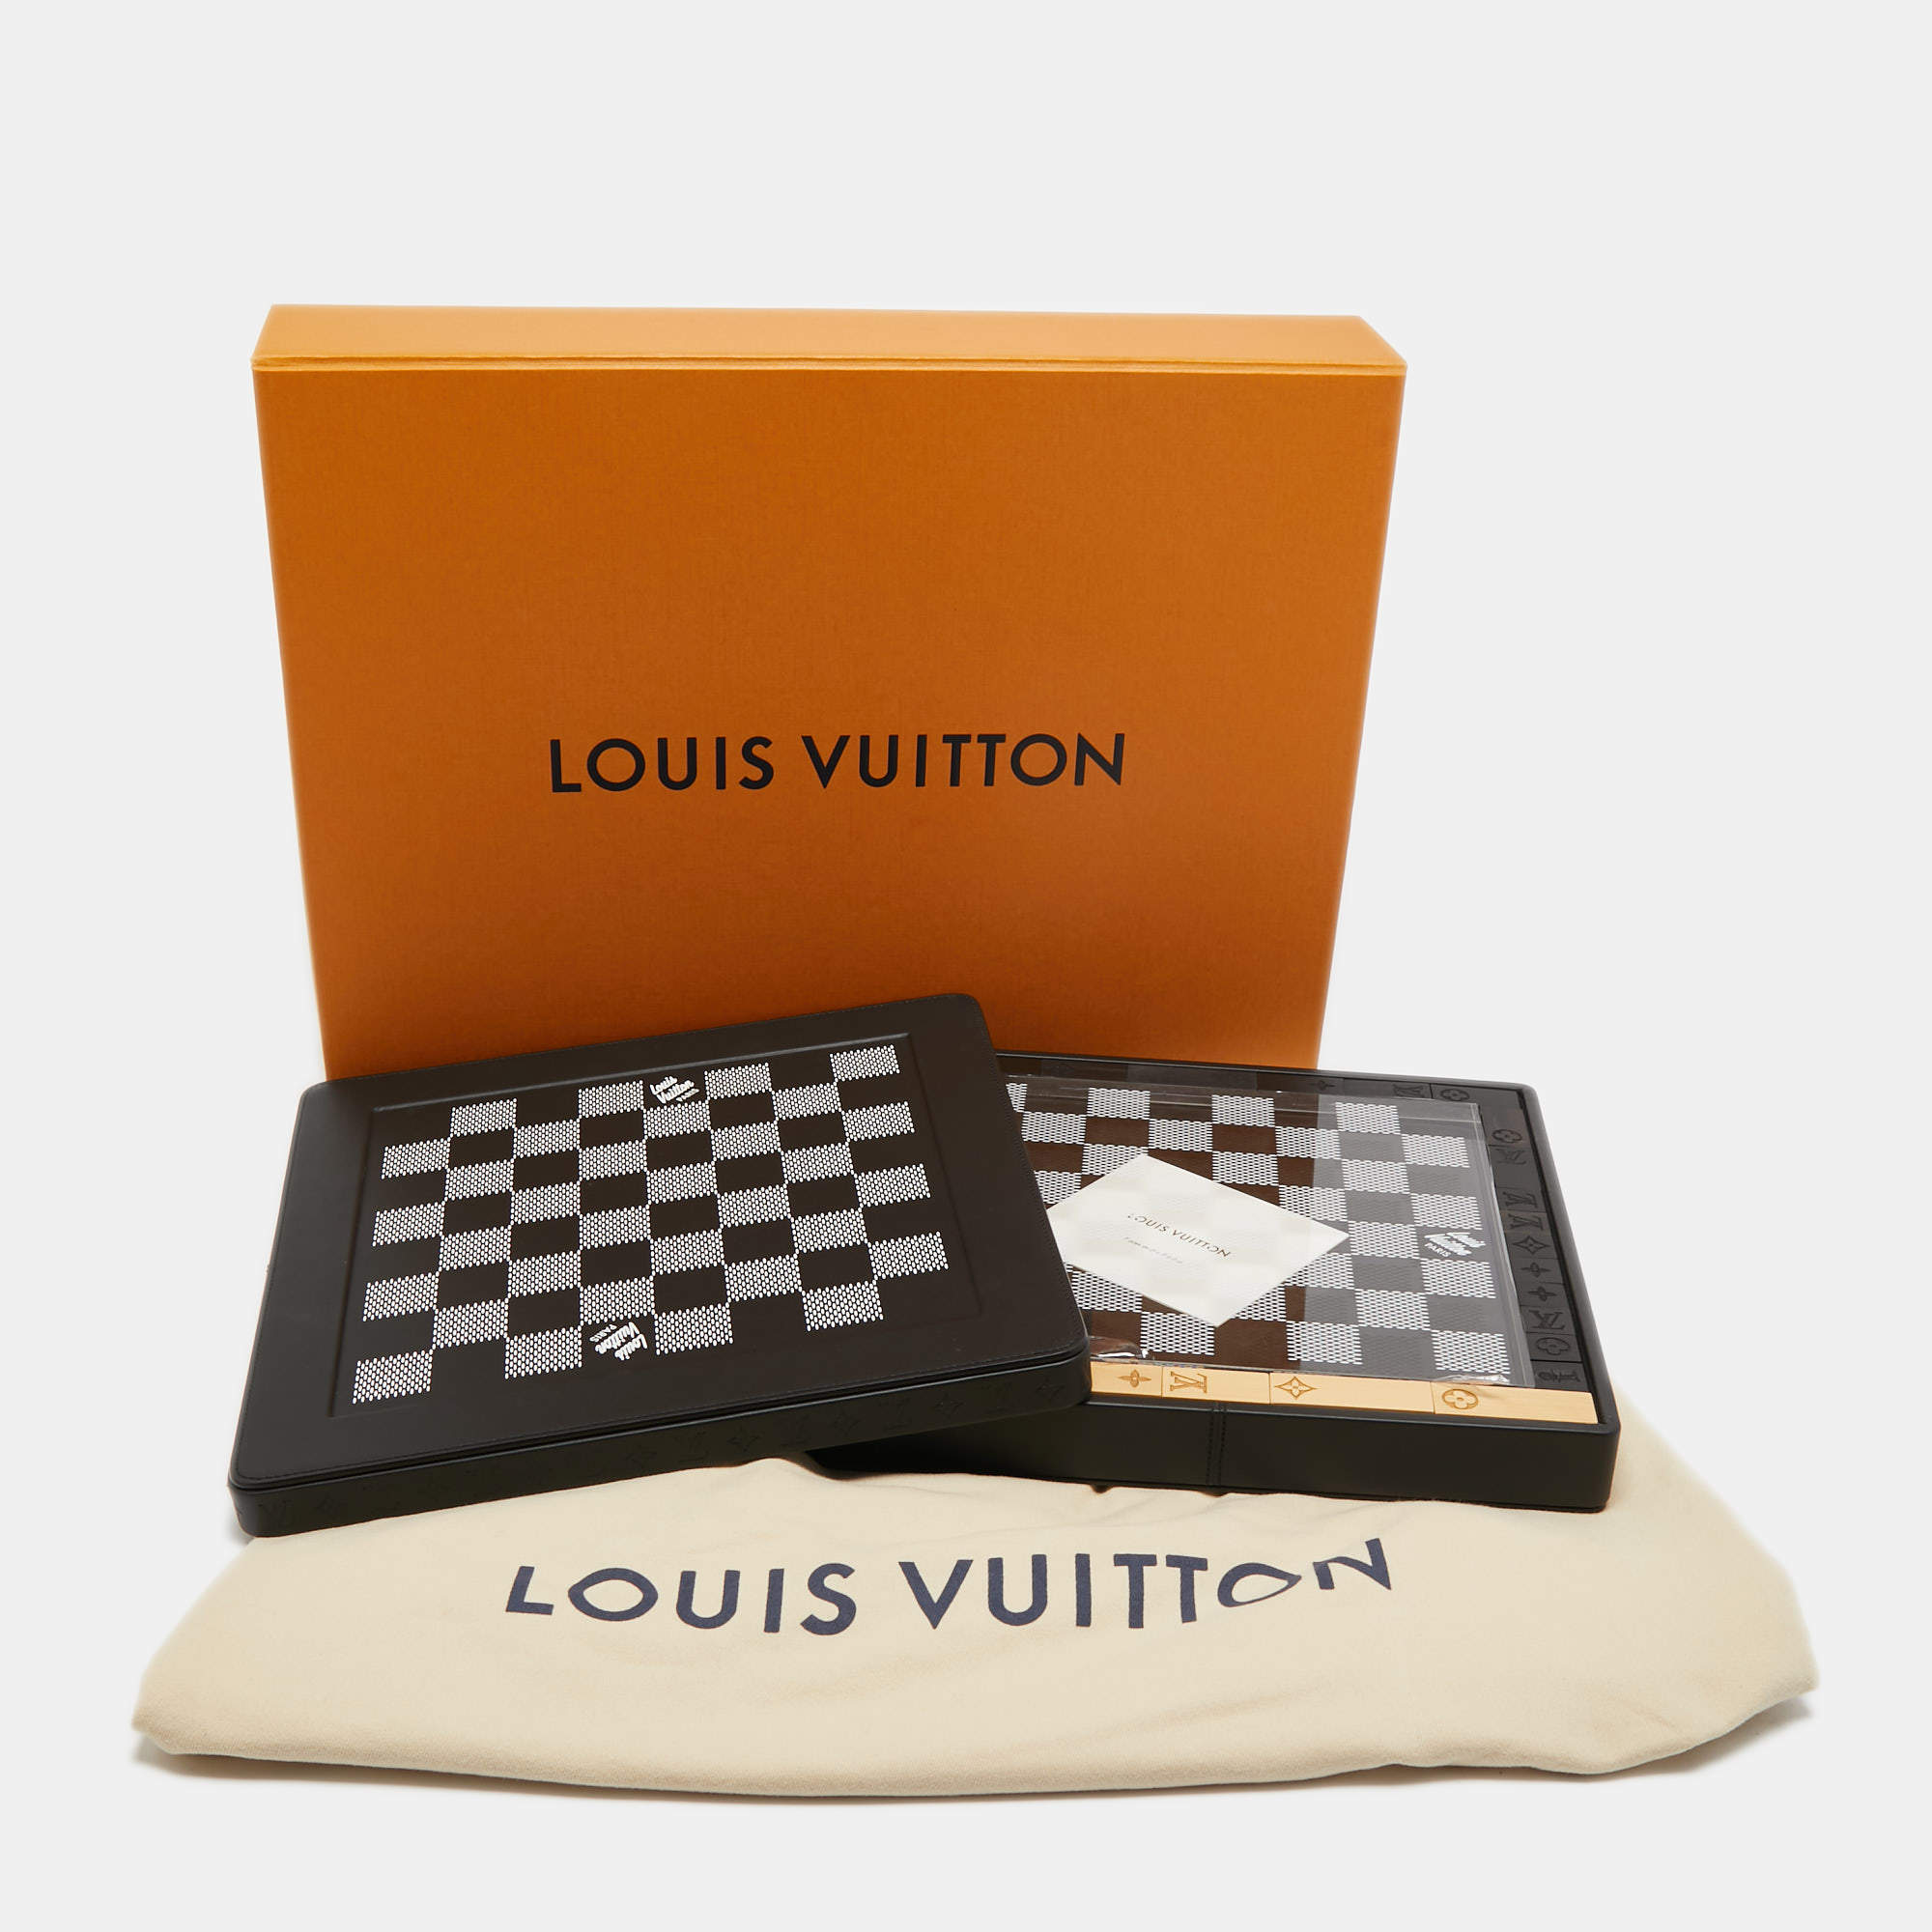 Louis Vuitton Chess Game